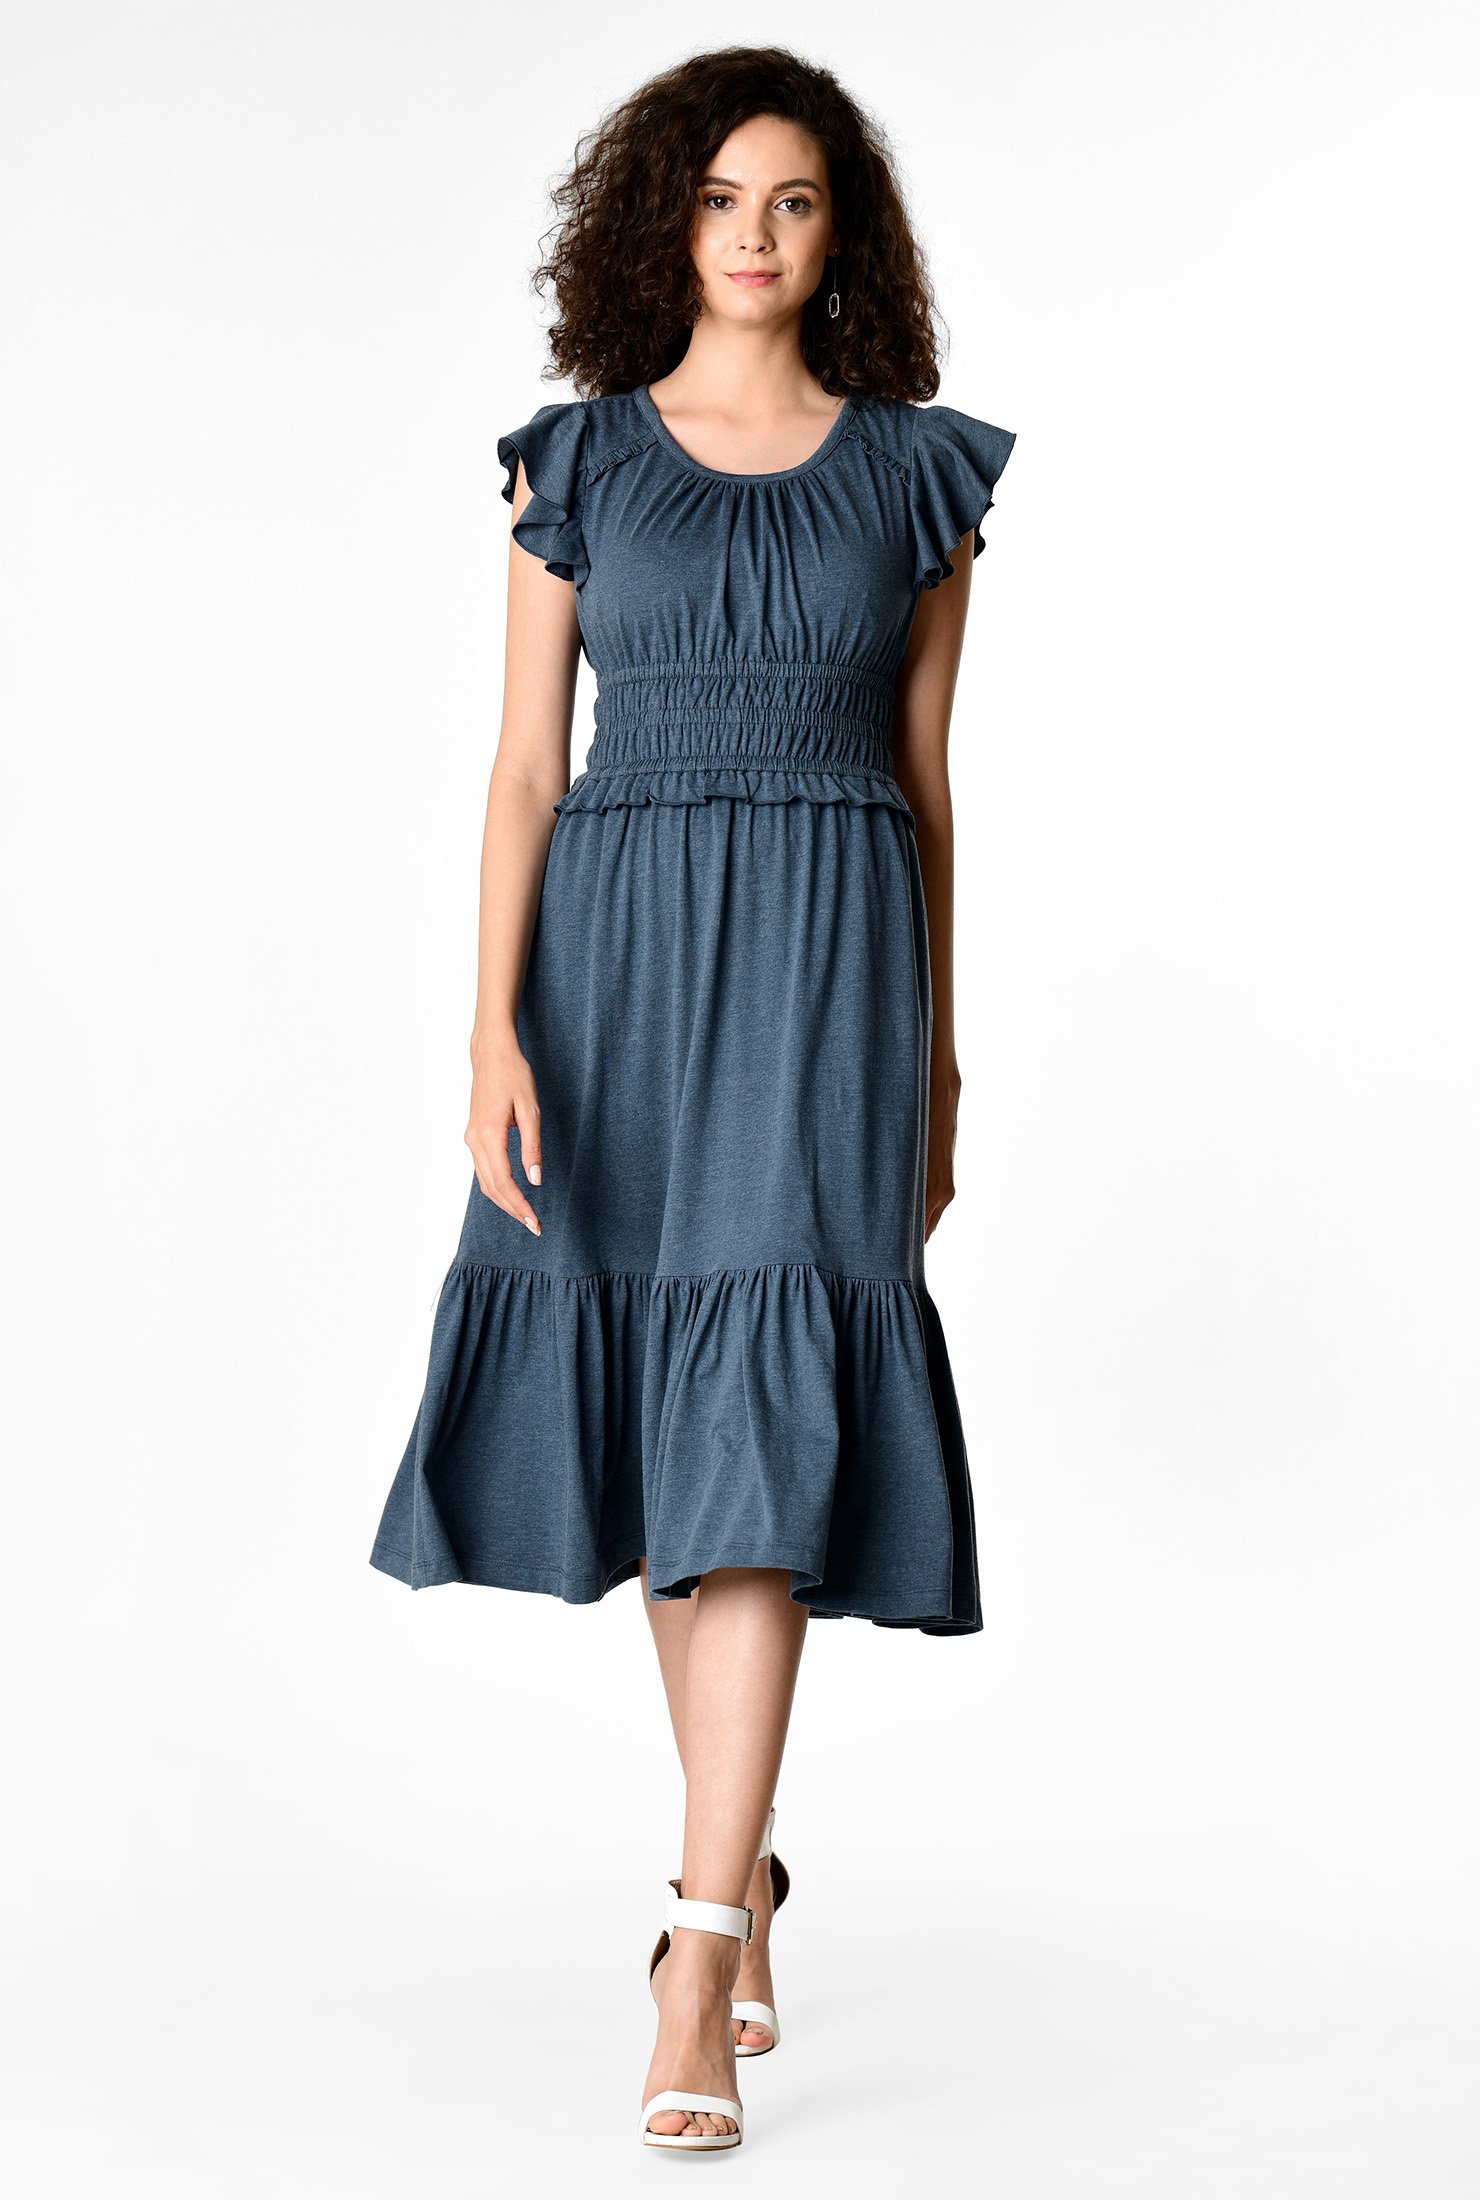 Shop Ruffle cotton knit elastic waist dress | eShakti